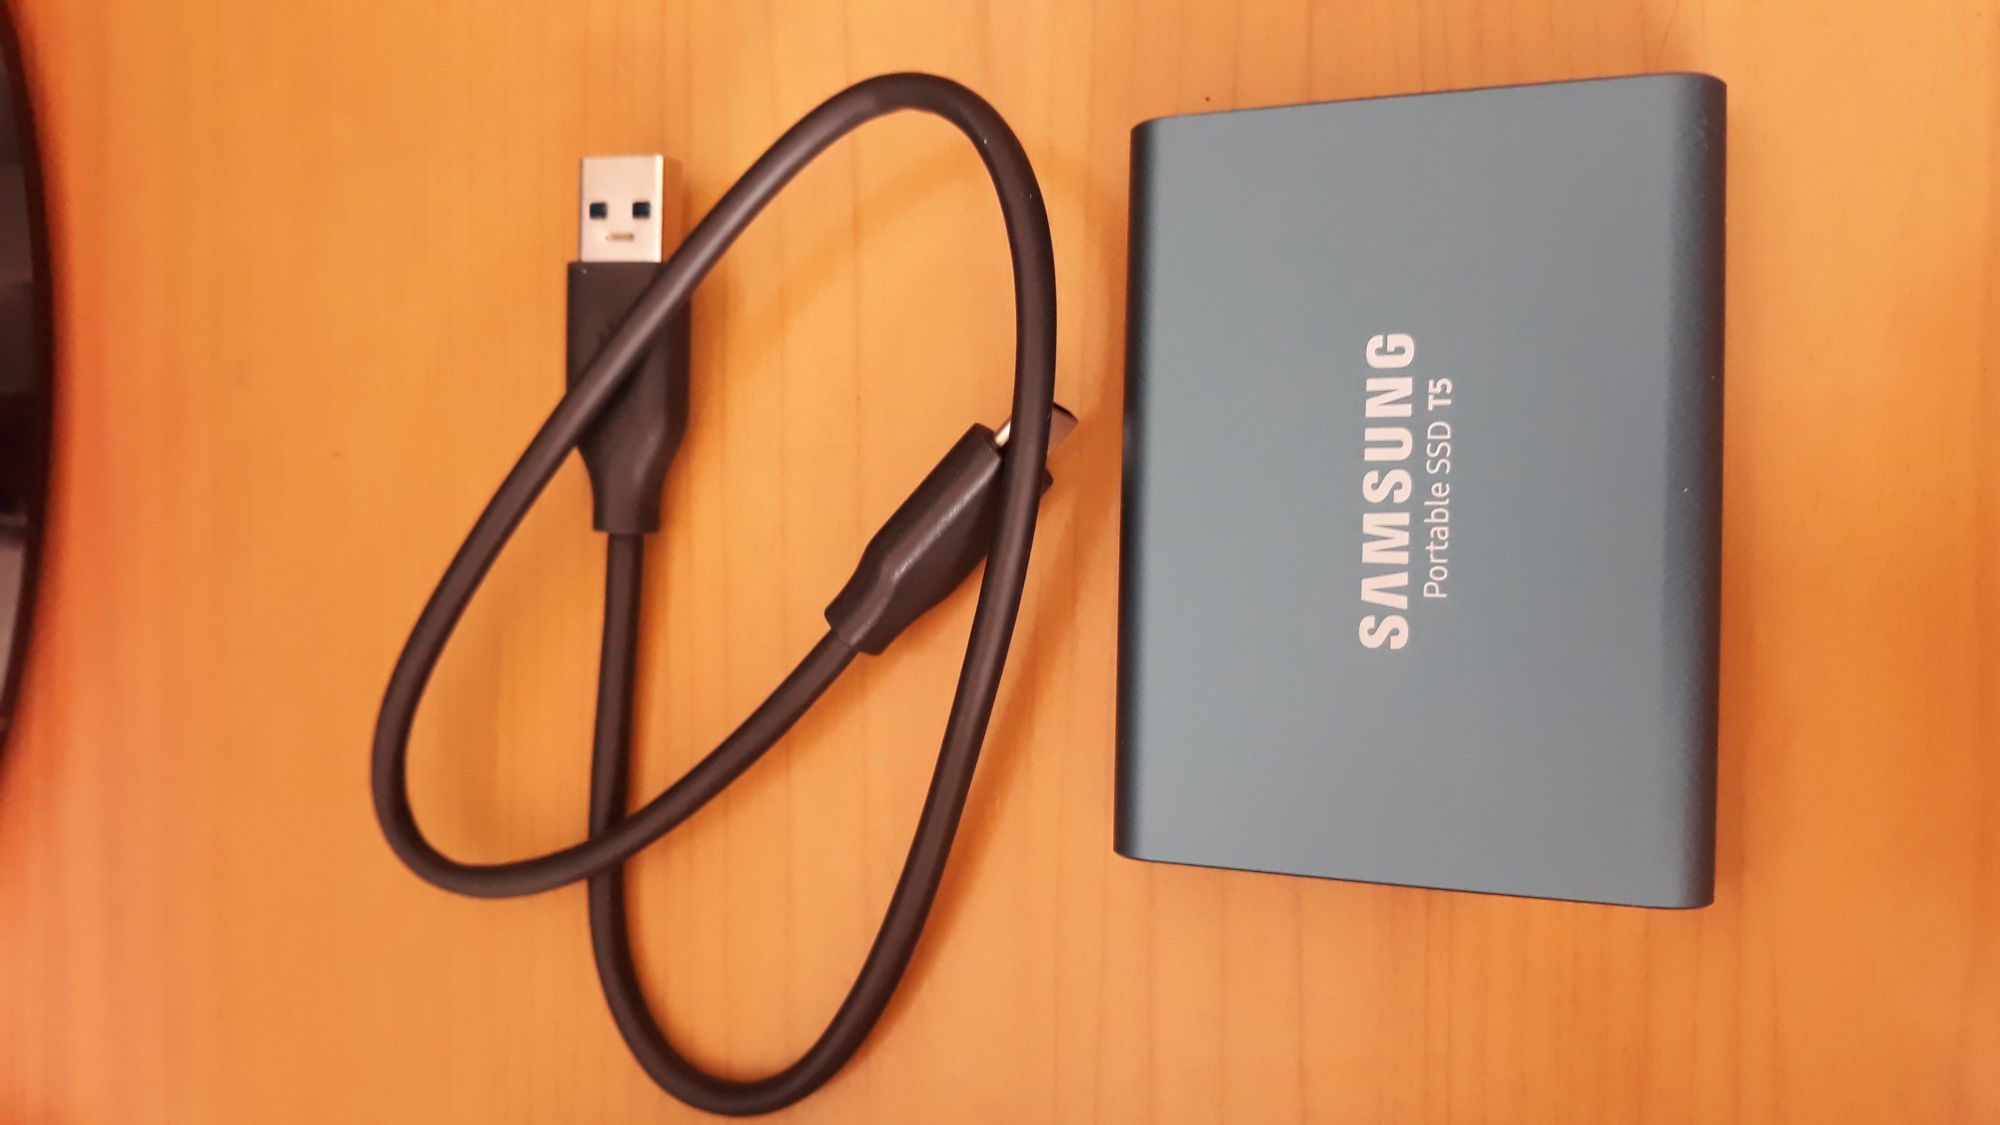 T5 Portable SSD 2TB Up to 540MB s USB 3.1 External Solid State Drive, Black (MU-PA2T0B AM) - 5